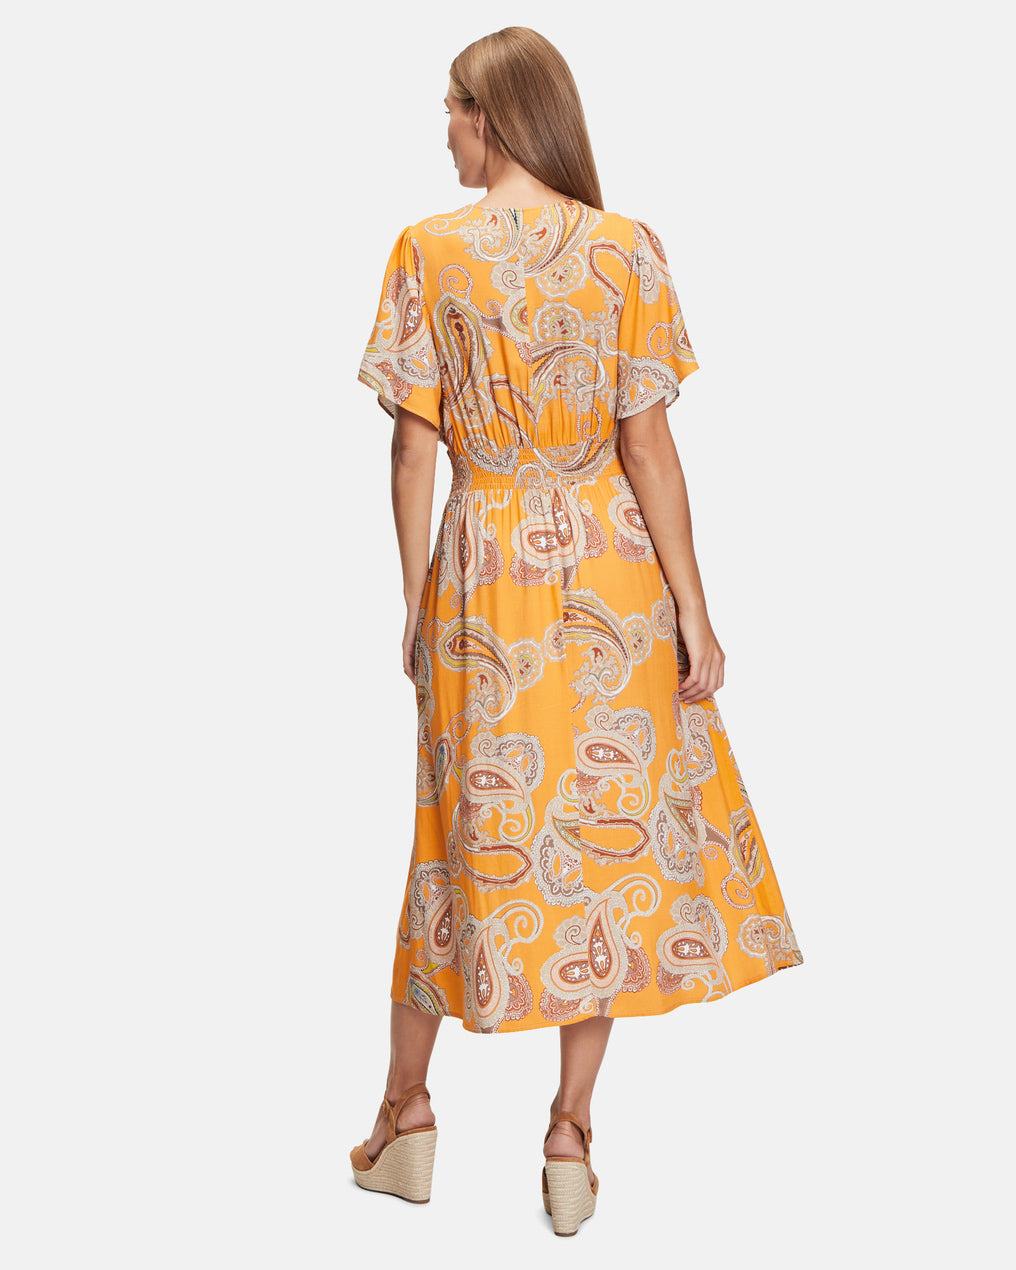 Orange Dress Long 1/2 Sleeve